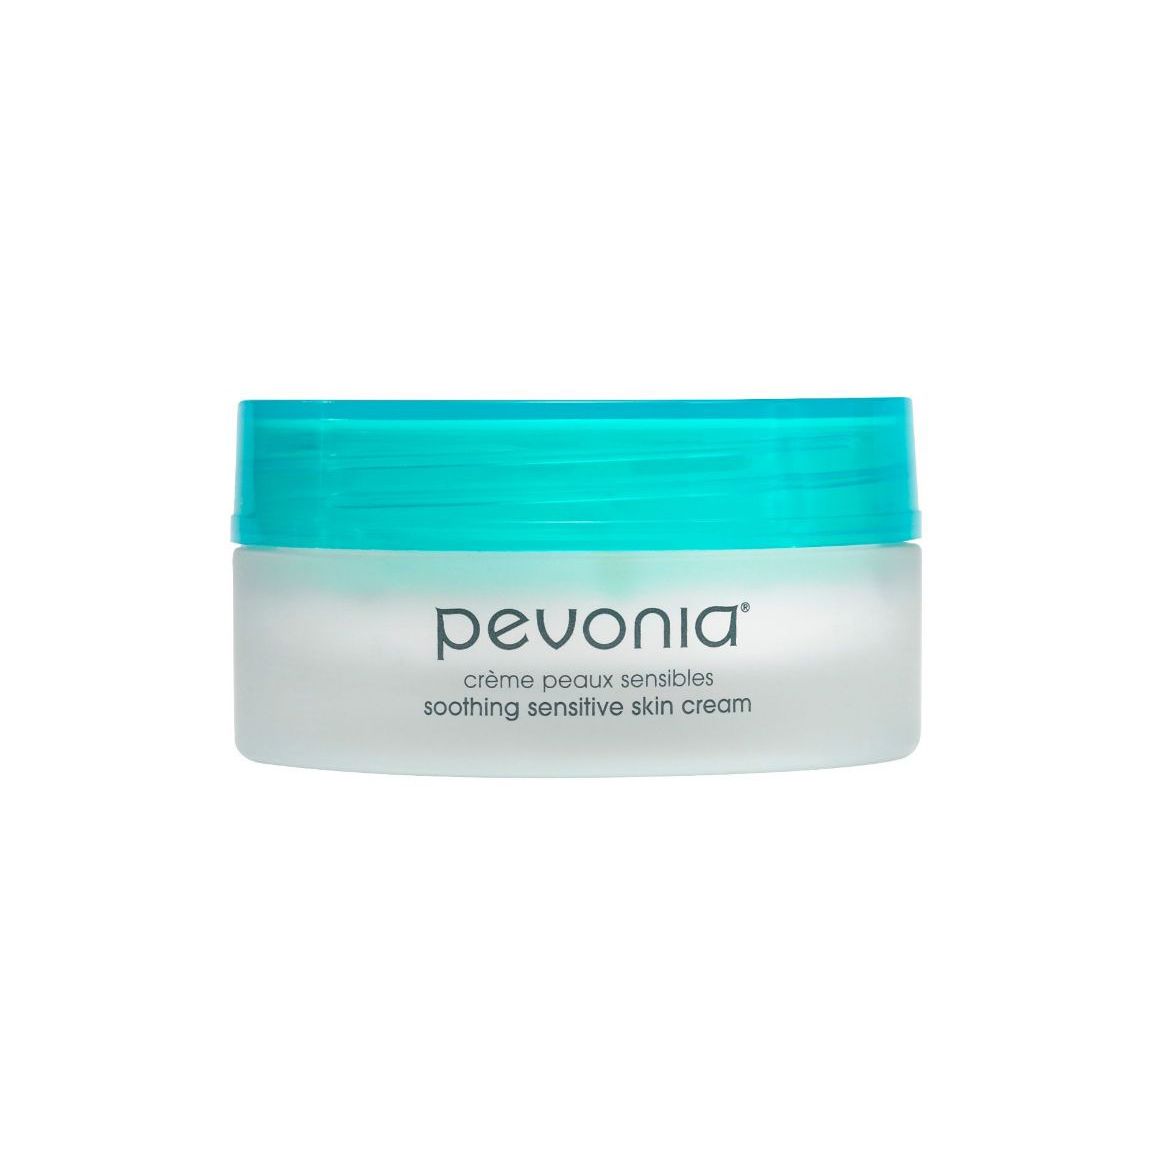 Image of Pevonia Soothing Sensitive Skin Cream (50ml)